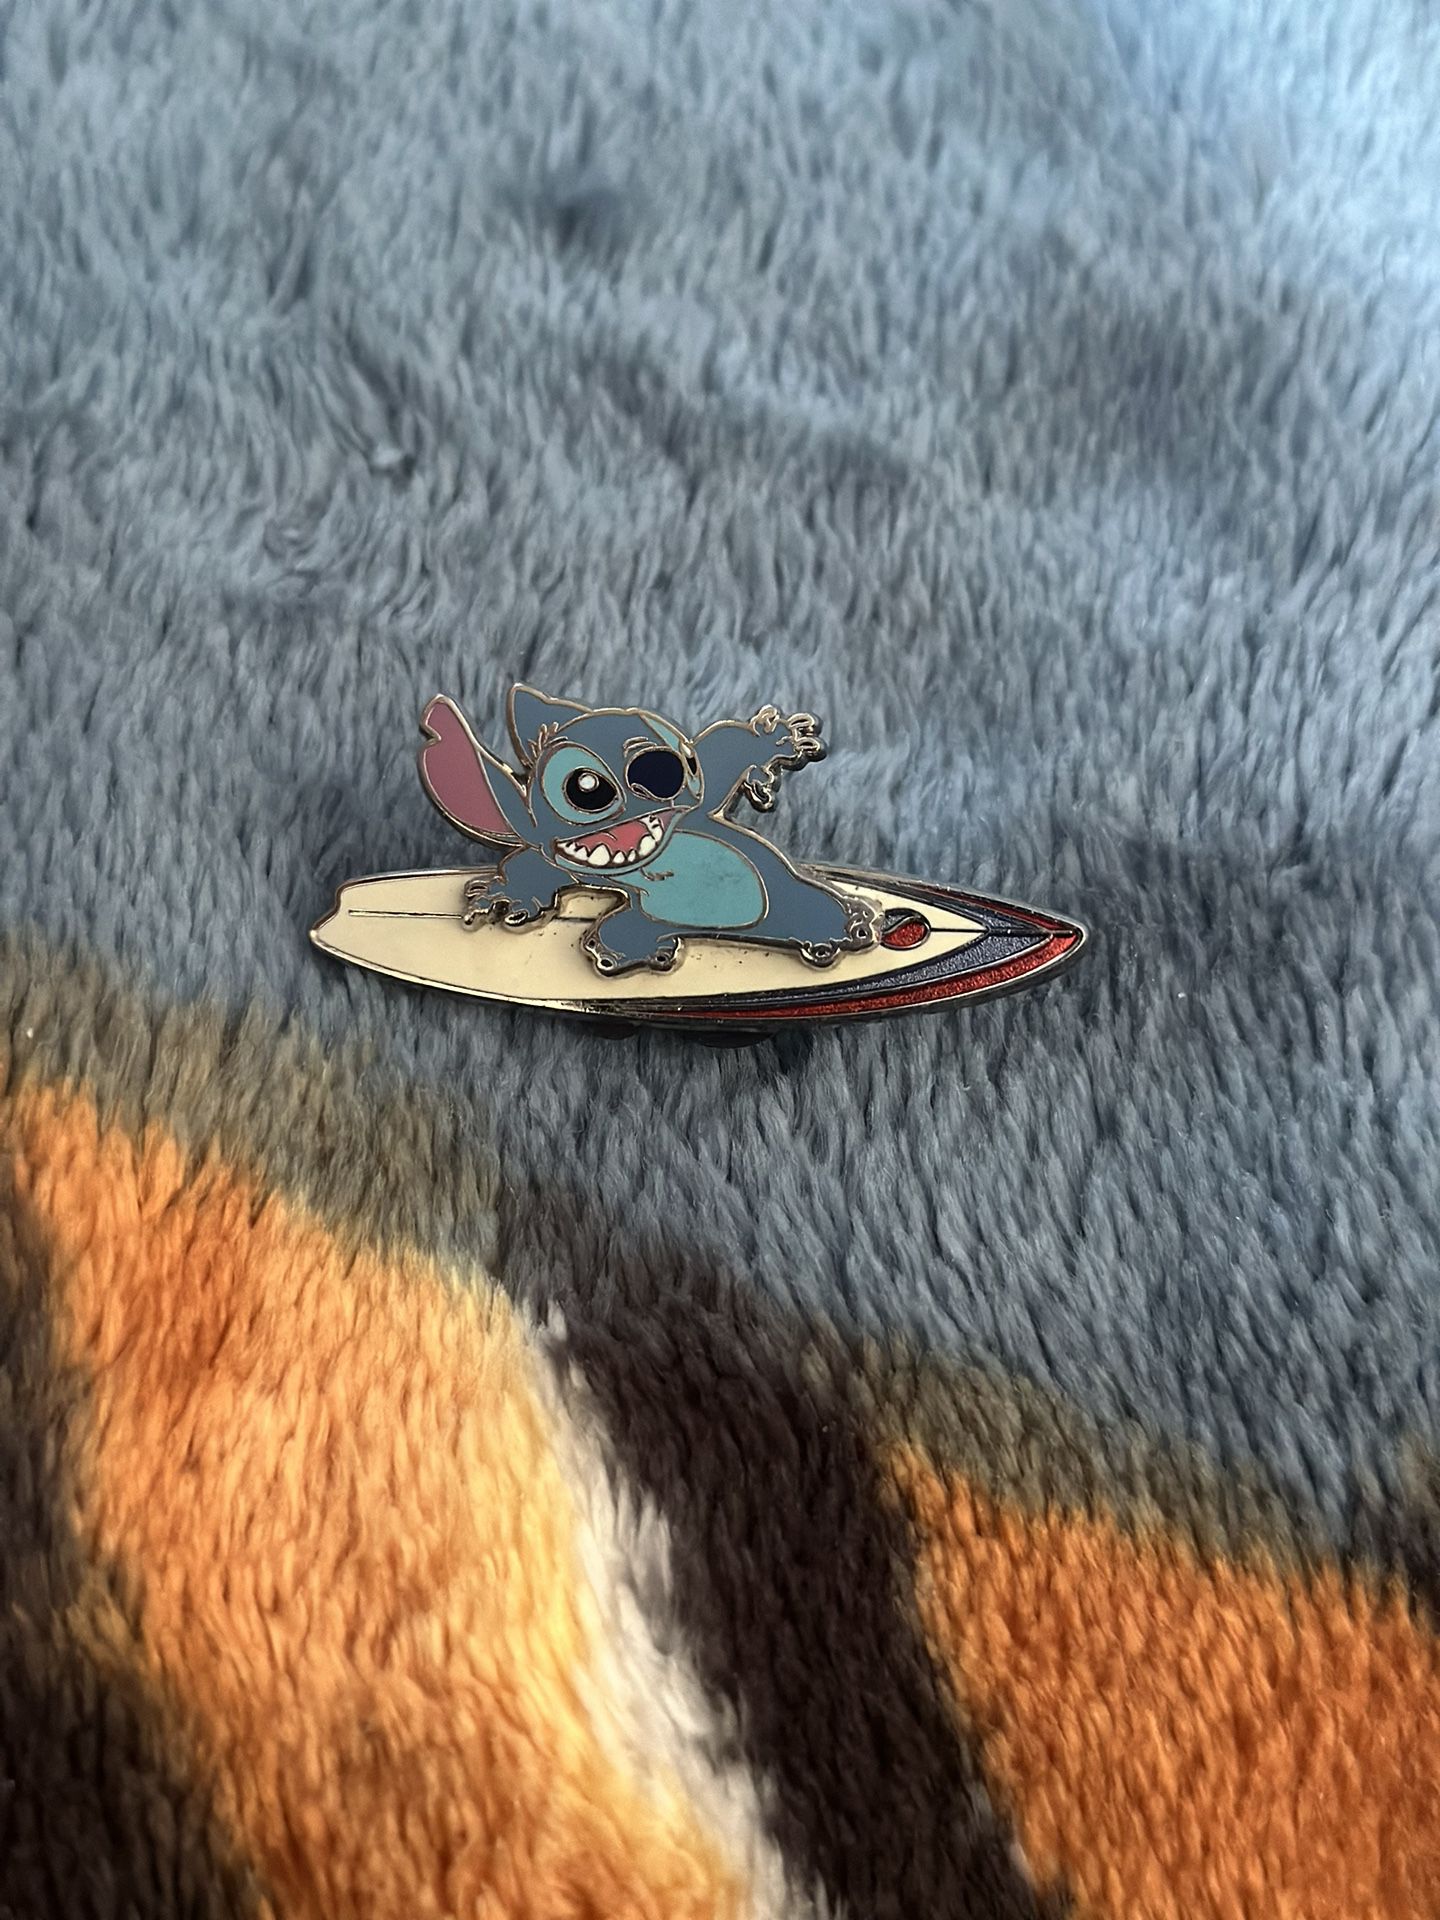 Stitch On Surfboard Disney Pin